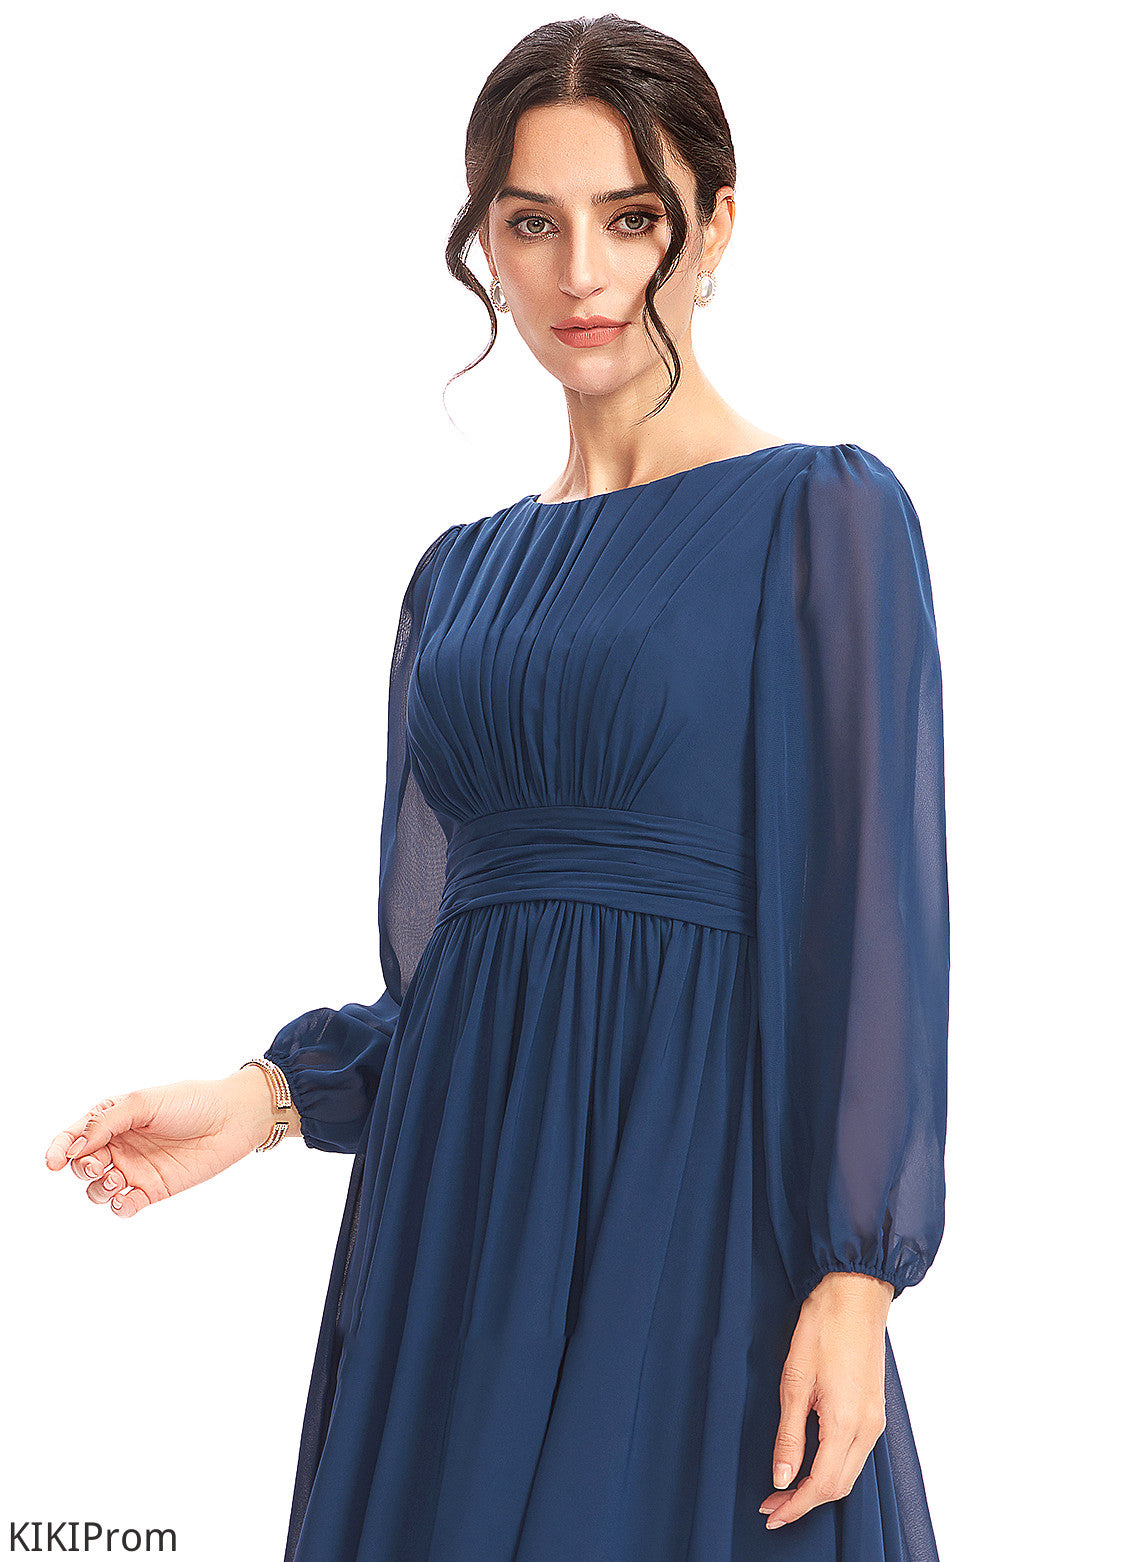 Silhouette Embellishment Straps Ruffle Floor-Length A-Line Length Fabric Bryanna Bridesmaid Dresses